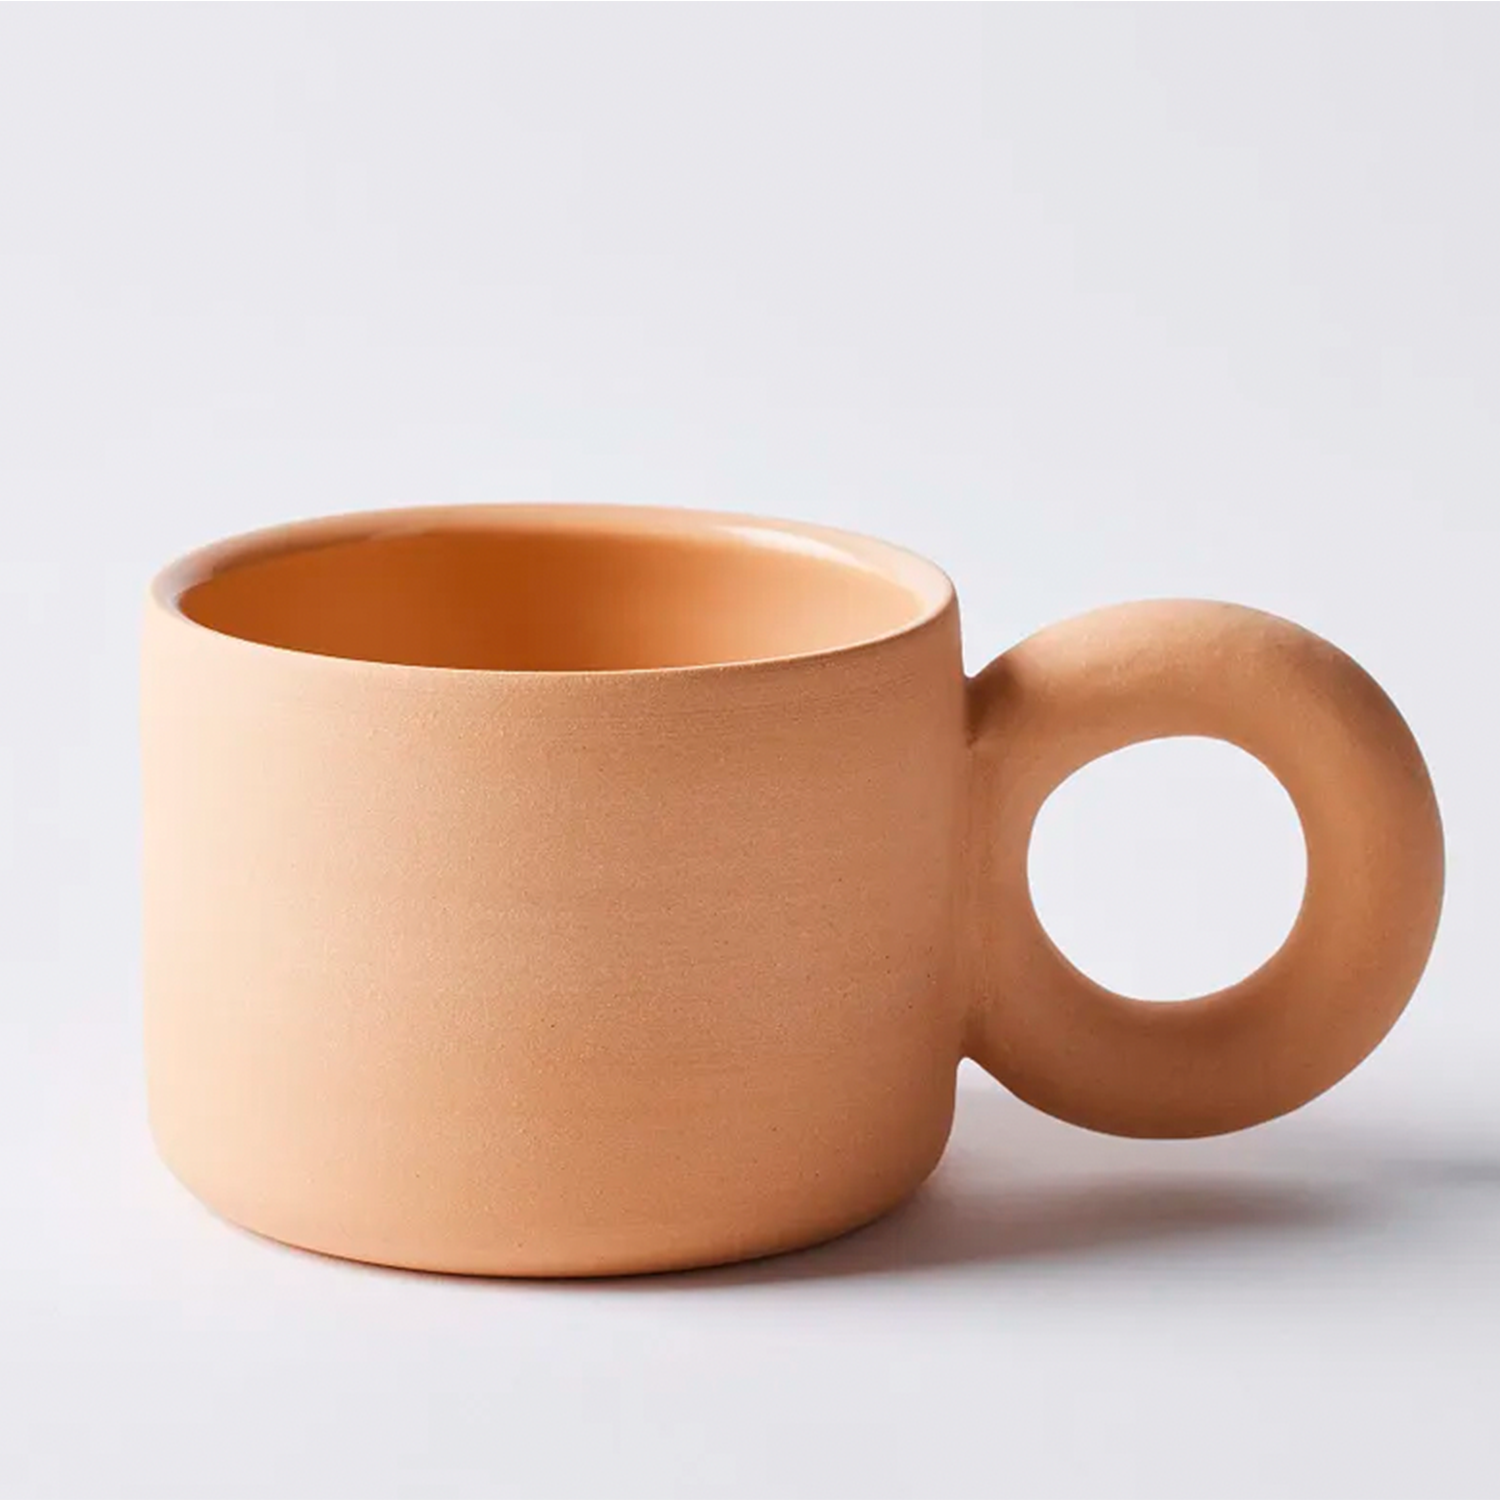 Limited-Edition Handmade Mug, by Ekua Ceramics